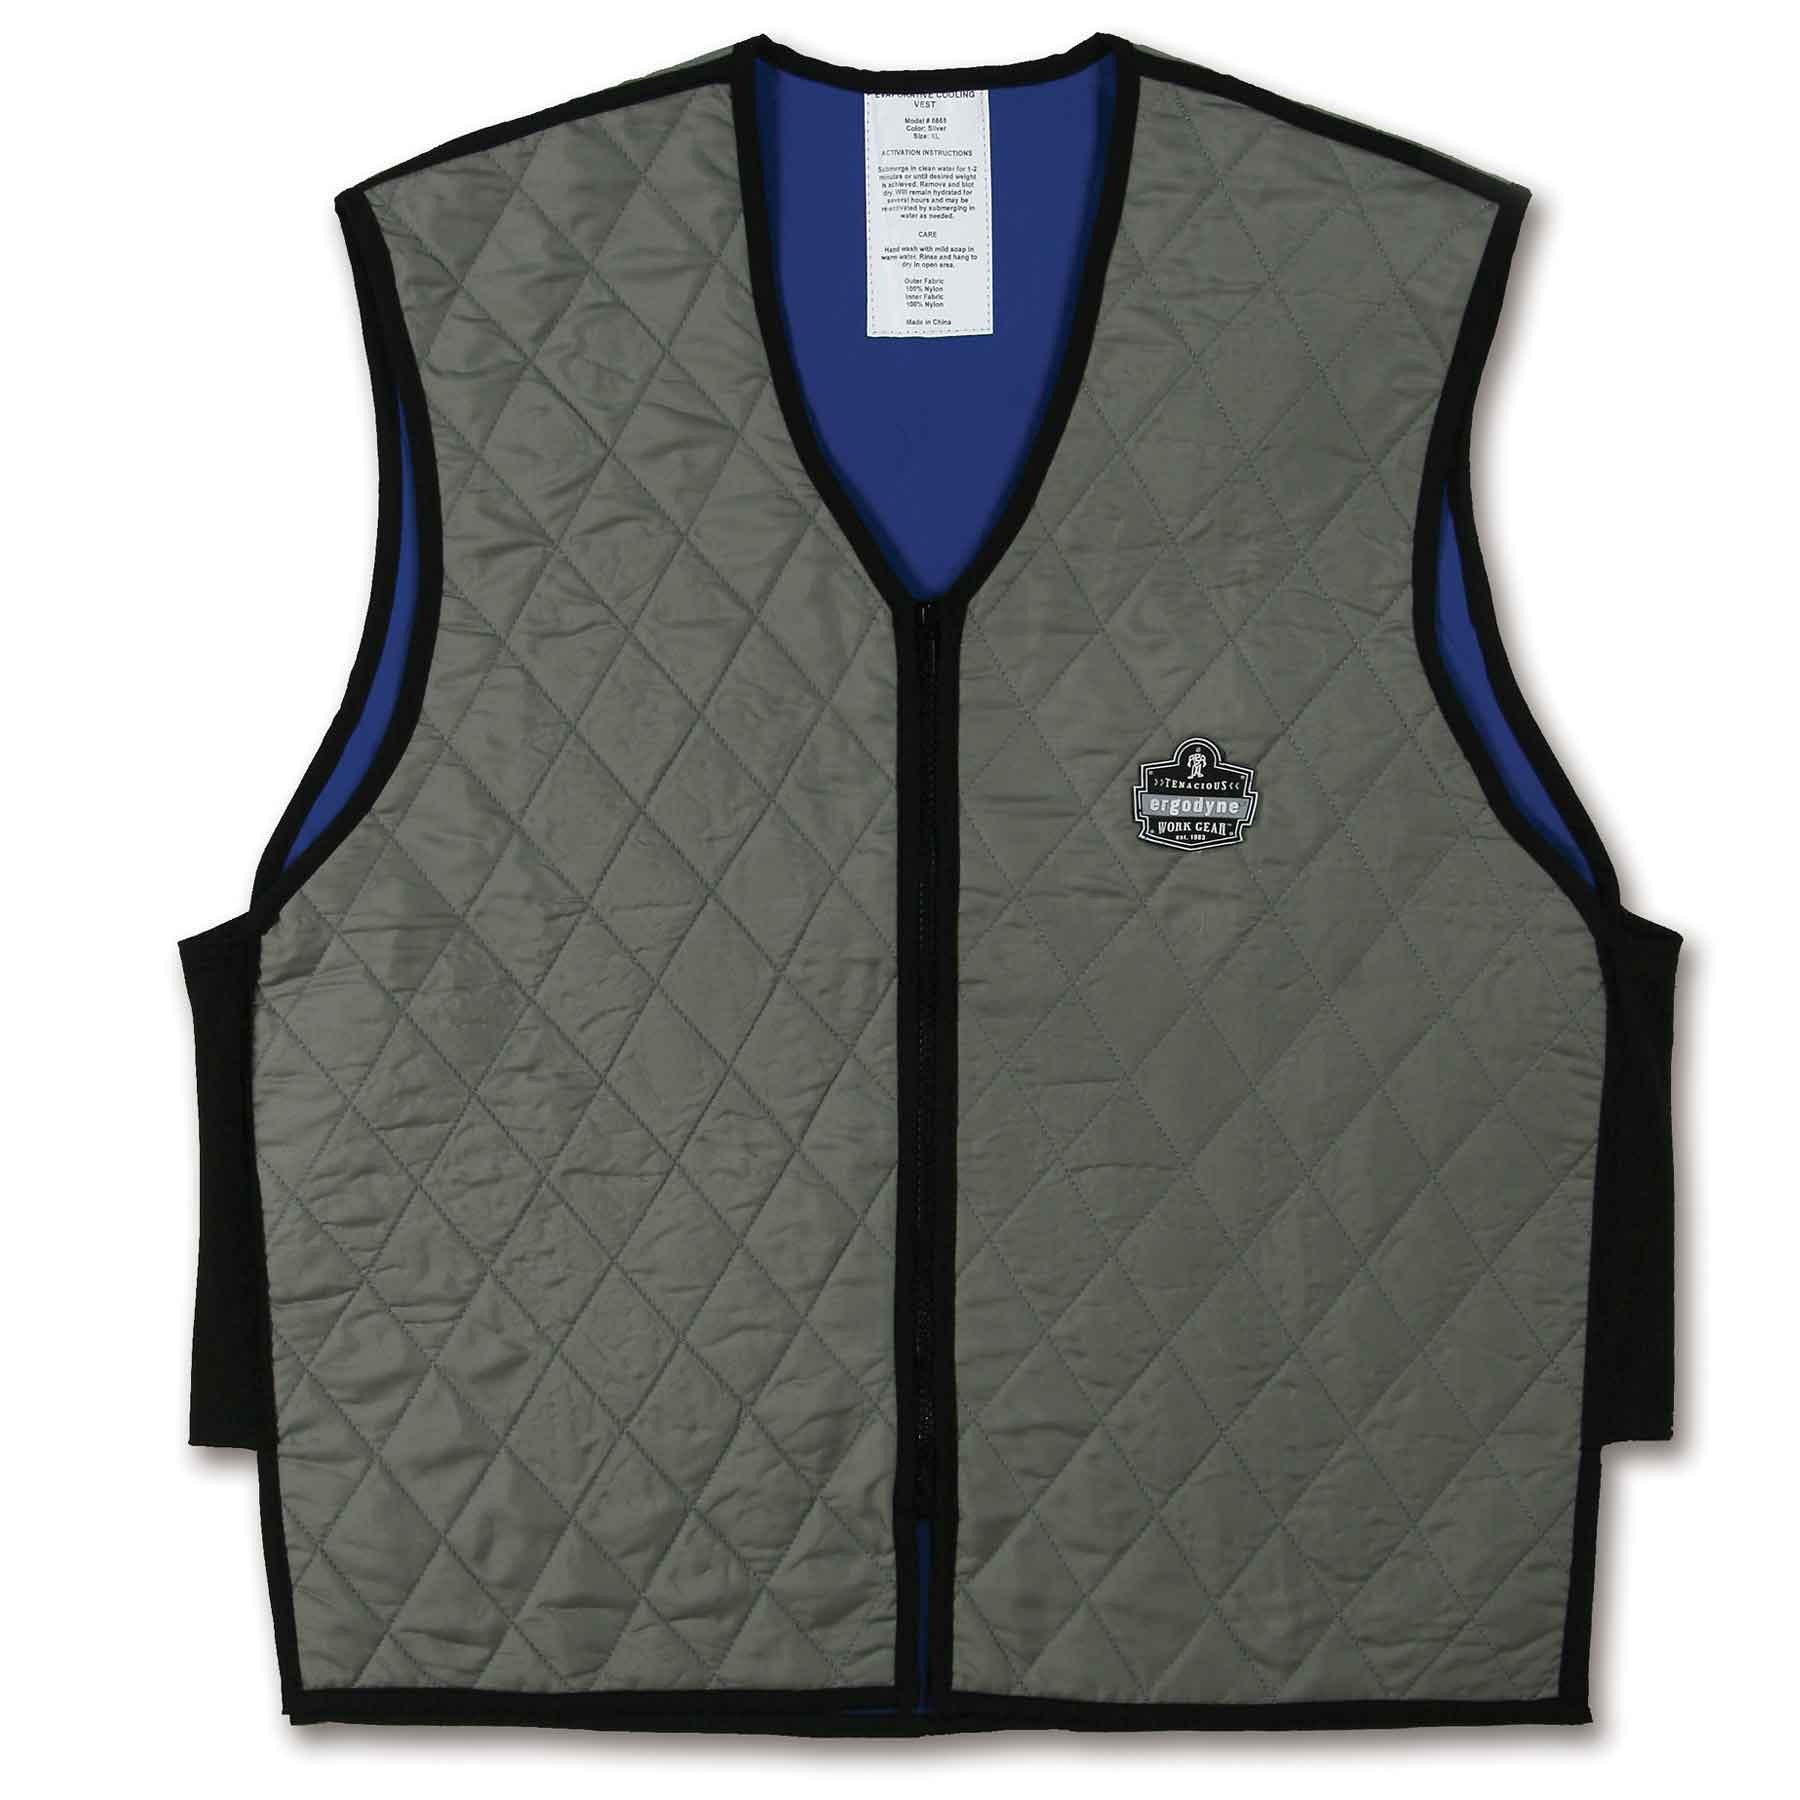 Ergodyne-Chill-Its 6665 Evaporative Cooling Vest